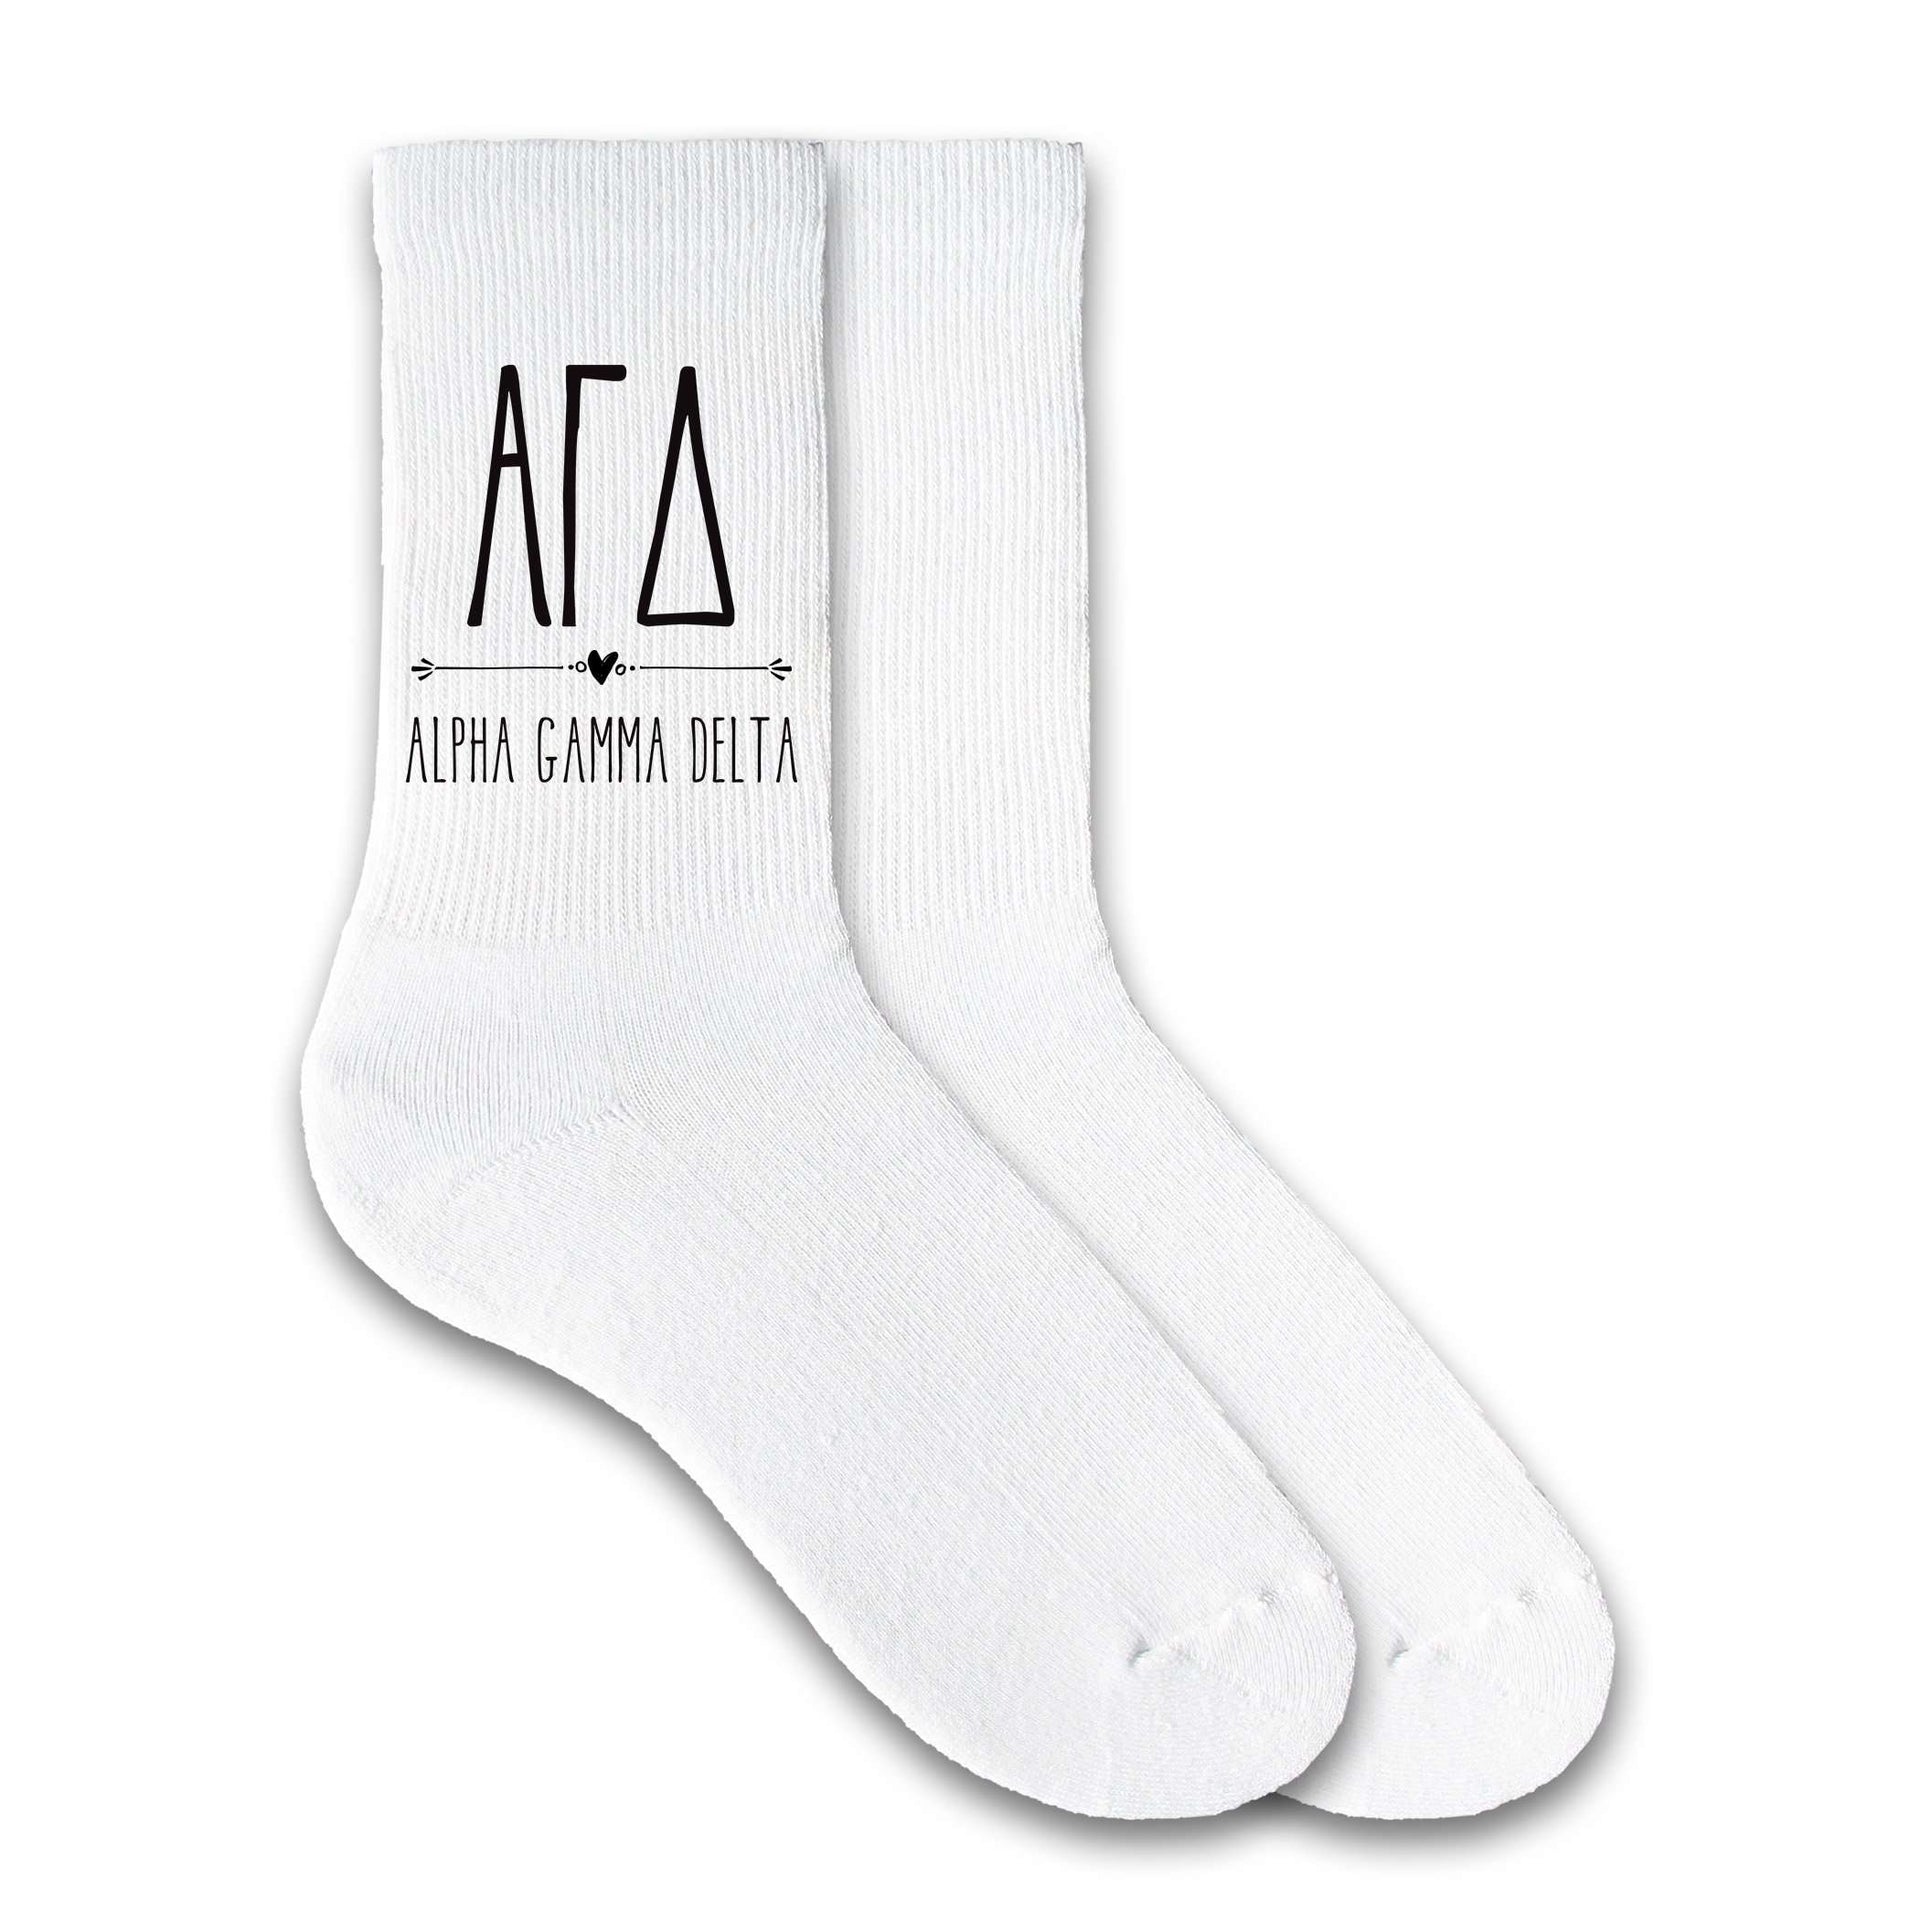 Alpha Gamma Delta sorority name custom printed on white cotton crew socks